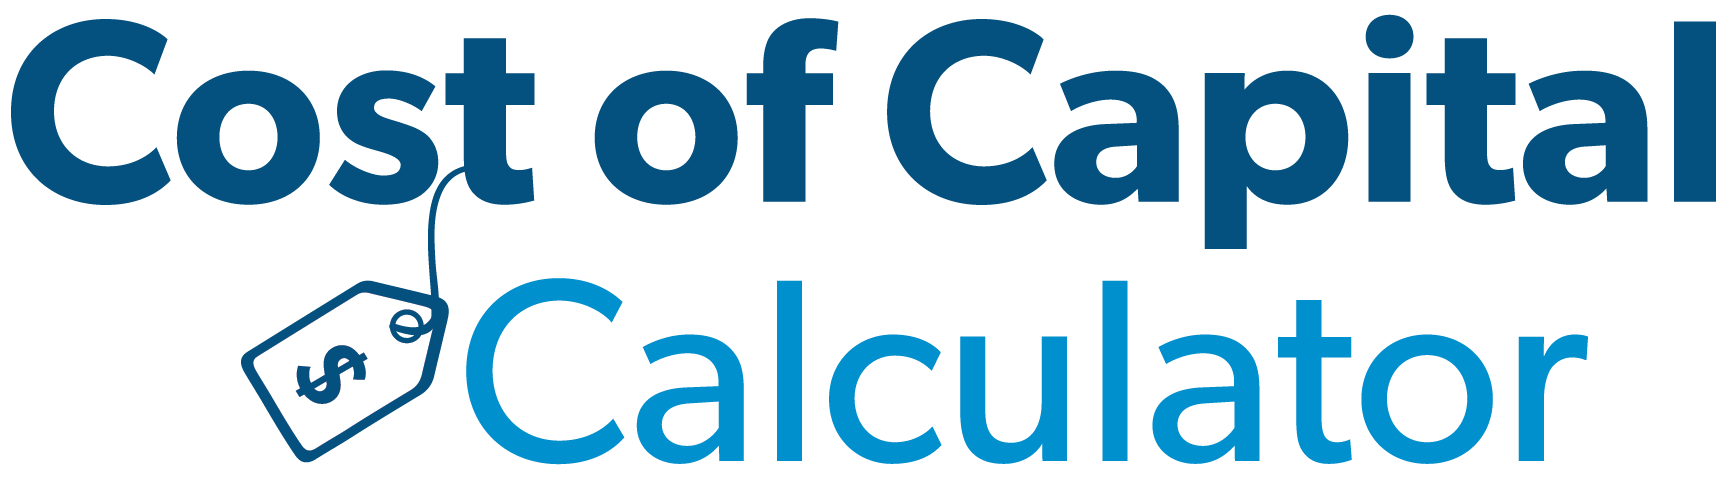 Cost-of-Capital-Calculator - Home